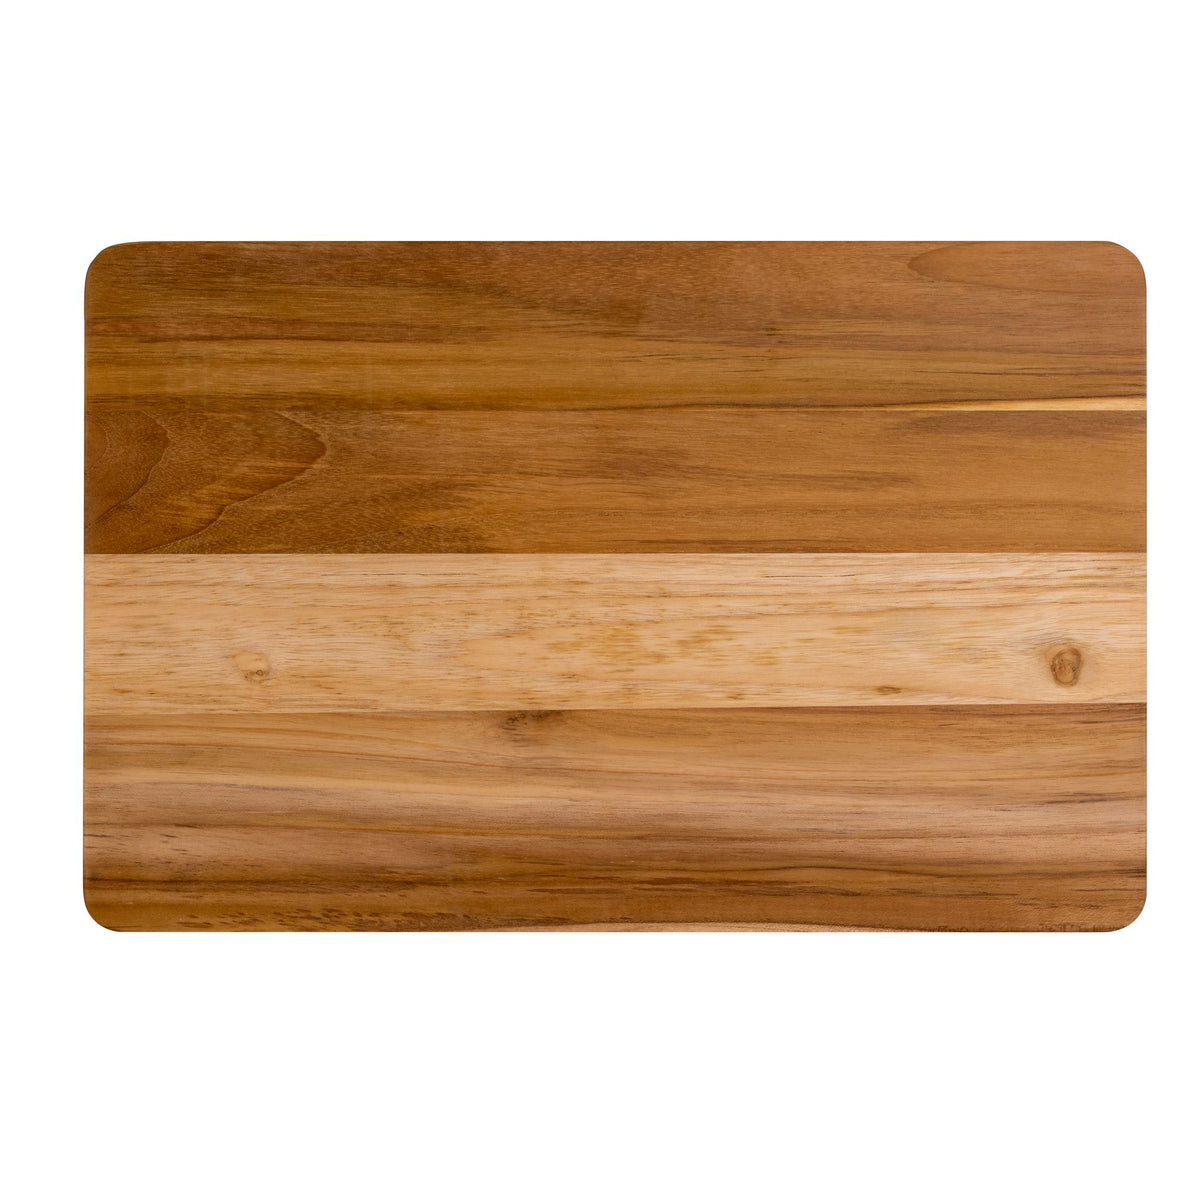 Bare Decor Zoe Butcher Block Countertop Cutting Board in Solid Teak Natural Wood 18x12x1.25